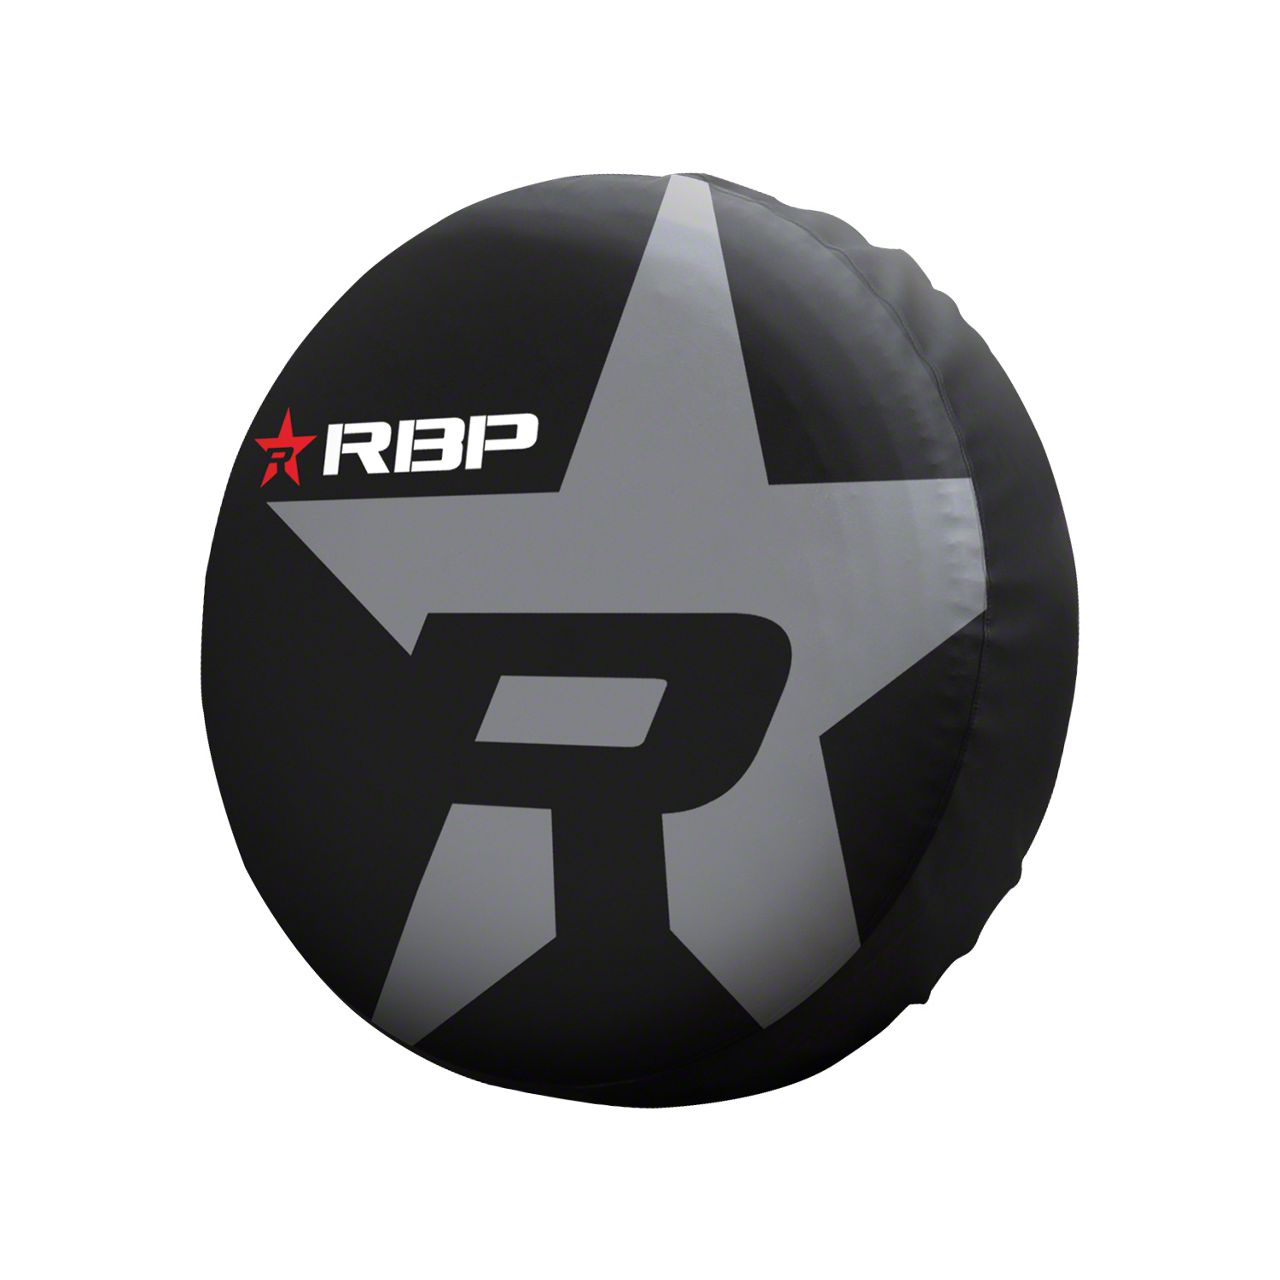 RBP Jeep Wrangler Spare Tire Cover; Gray Star; 29.50 to 32.50-Inch Tire  Cove RBP-TC2 (66-18 Jeep CJ5, CJ7, Wrangler YJ, TJ  JK) Free Shipping